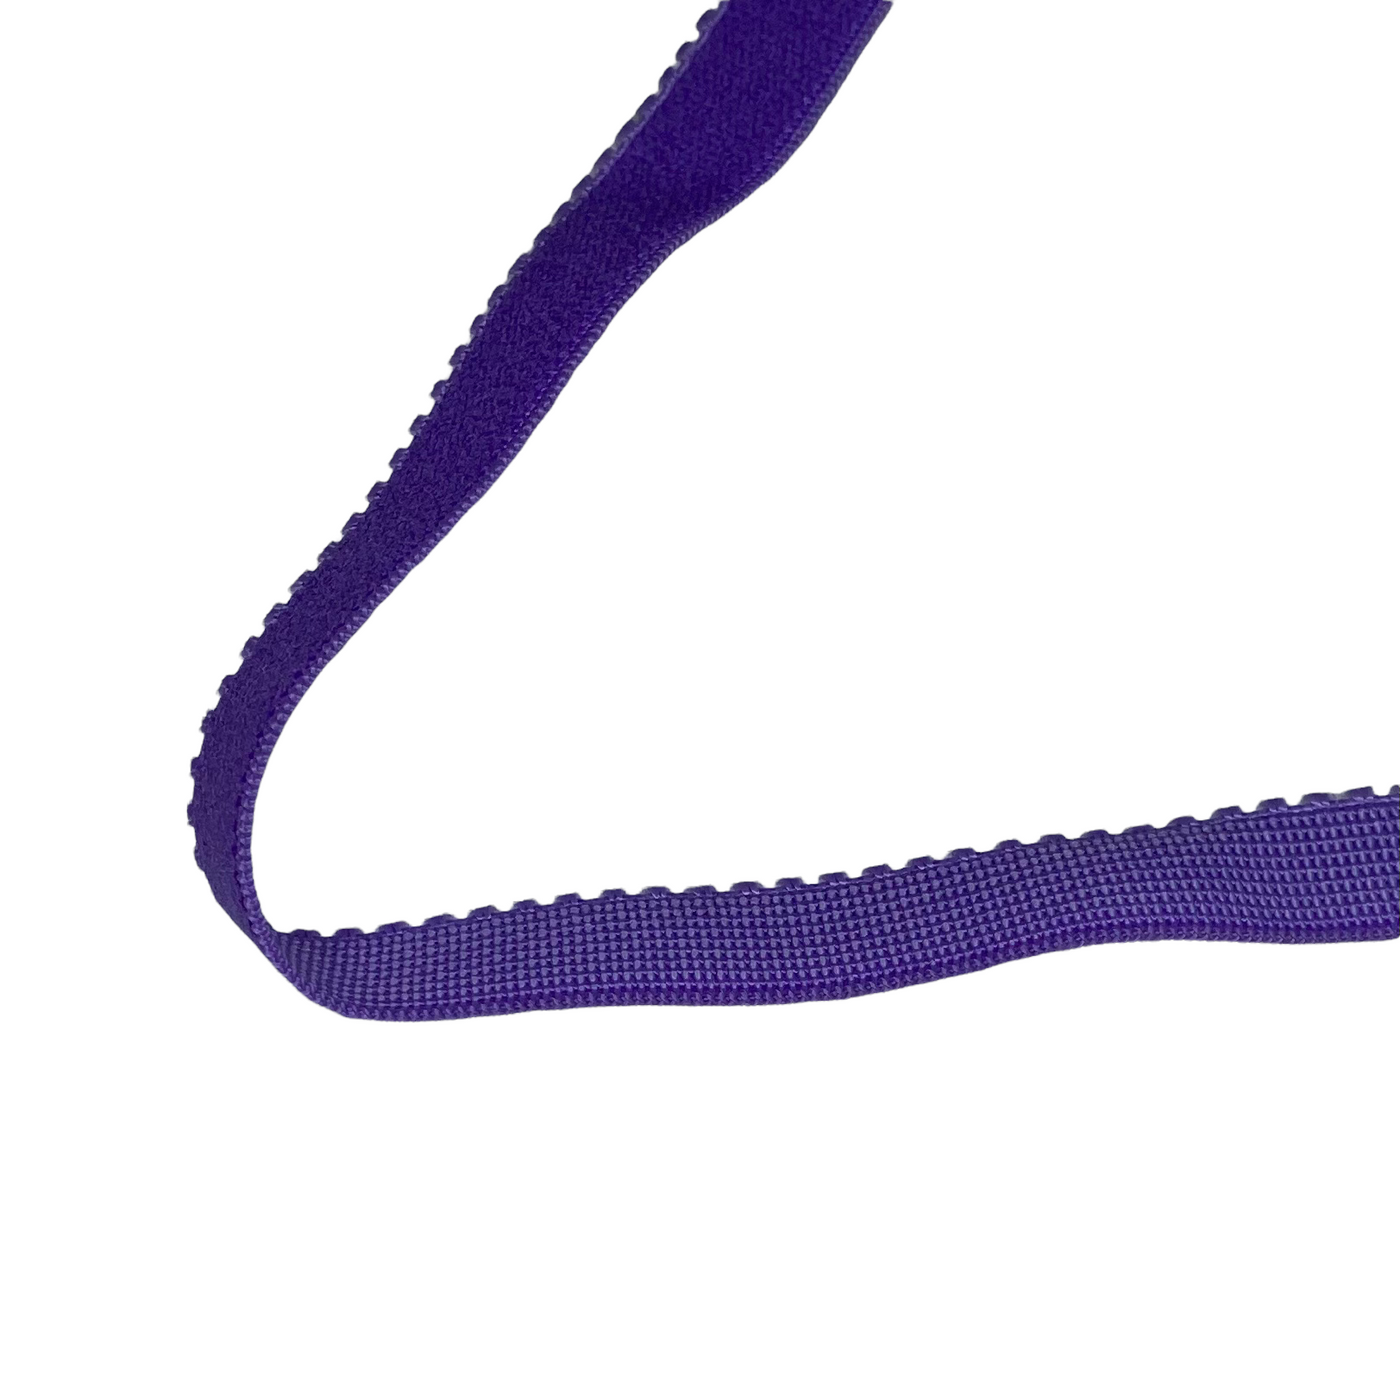 Picot Edge Decorative Elastic - Soft Back - 13mm - By the Yard - Purple